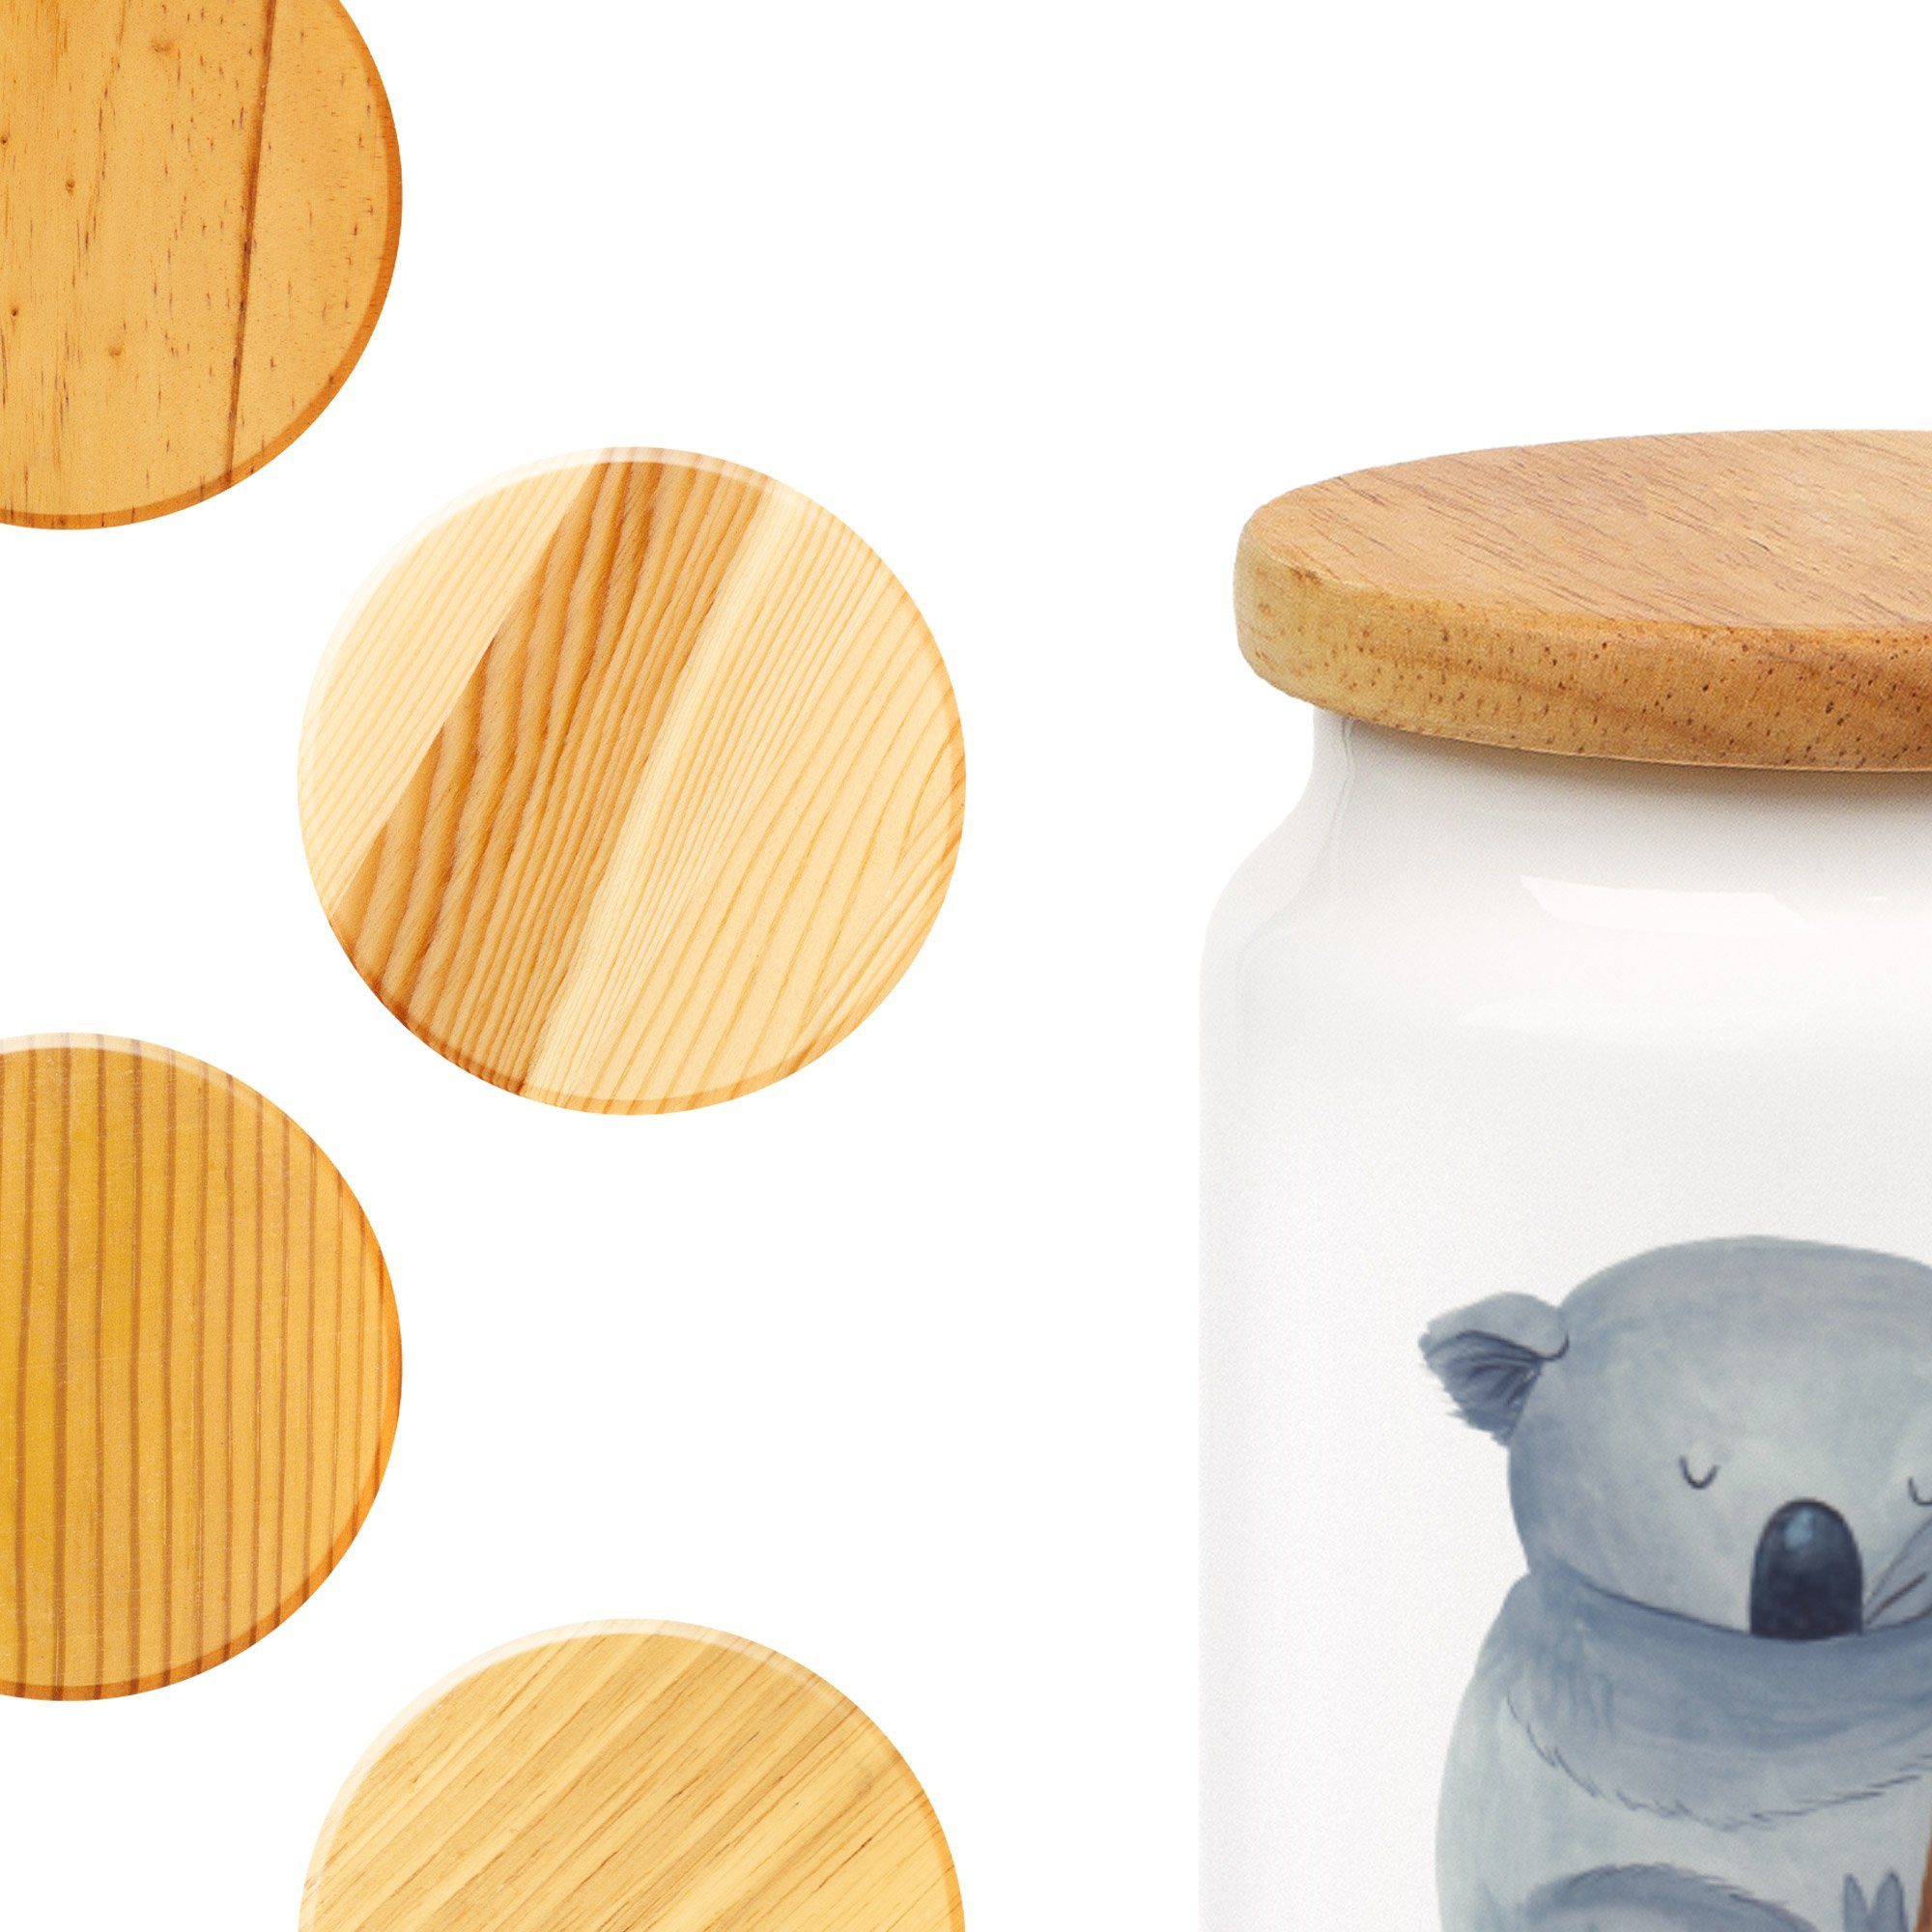 Mr. & Mrs. Panda - Dose, Vorratsd, Sprüche, - Vorratsdose Keramik, Geschenk, (1-tlg) Weiß Koalabär lustige Keksdose